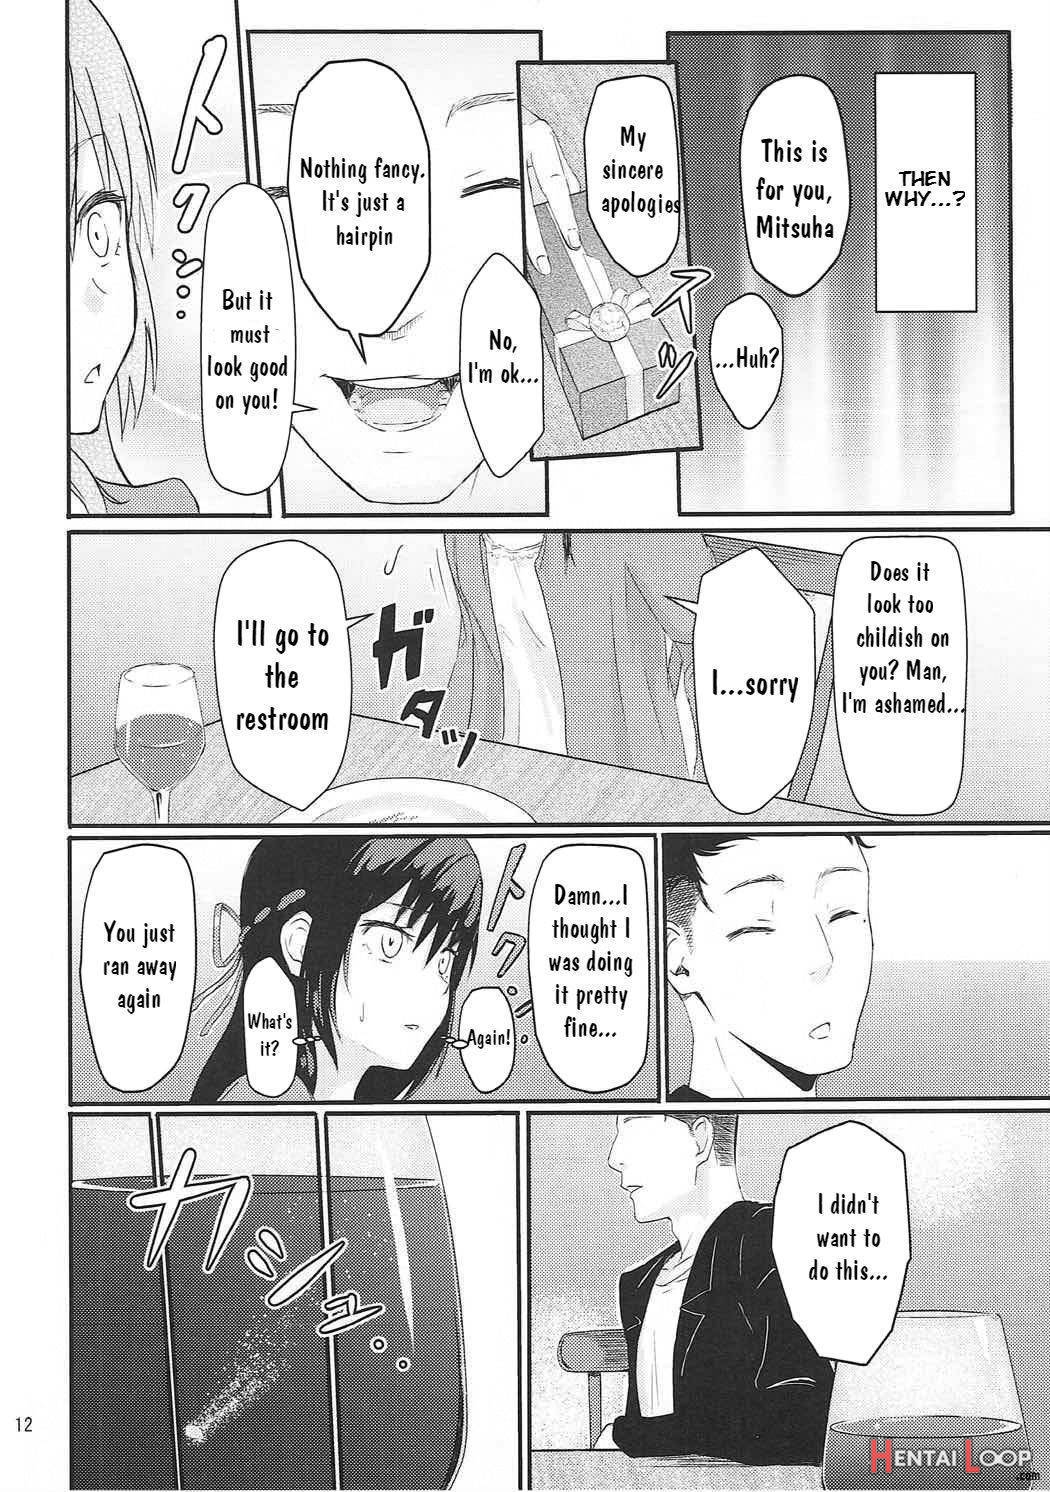 Mitsuha ~netorare~ page 11